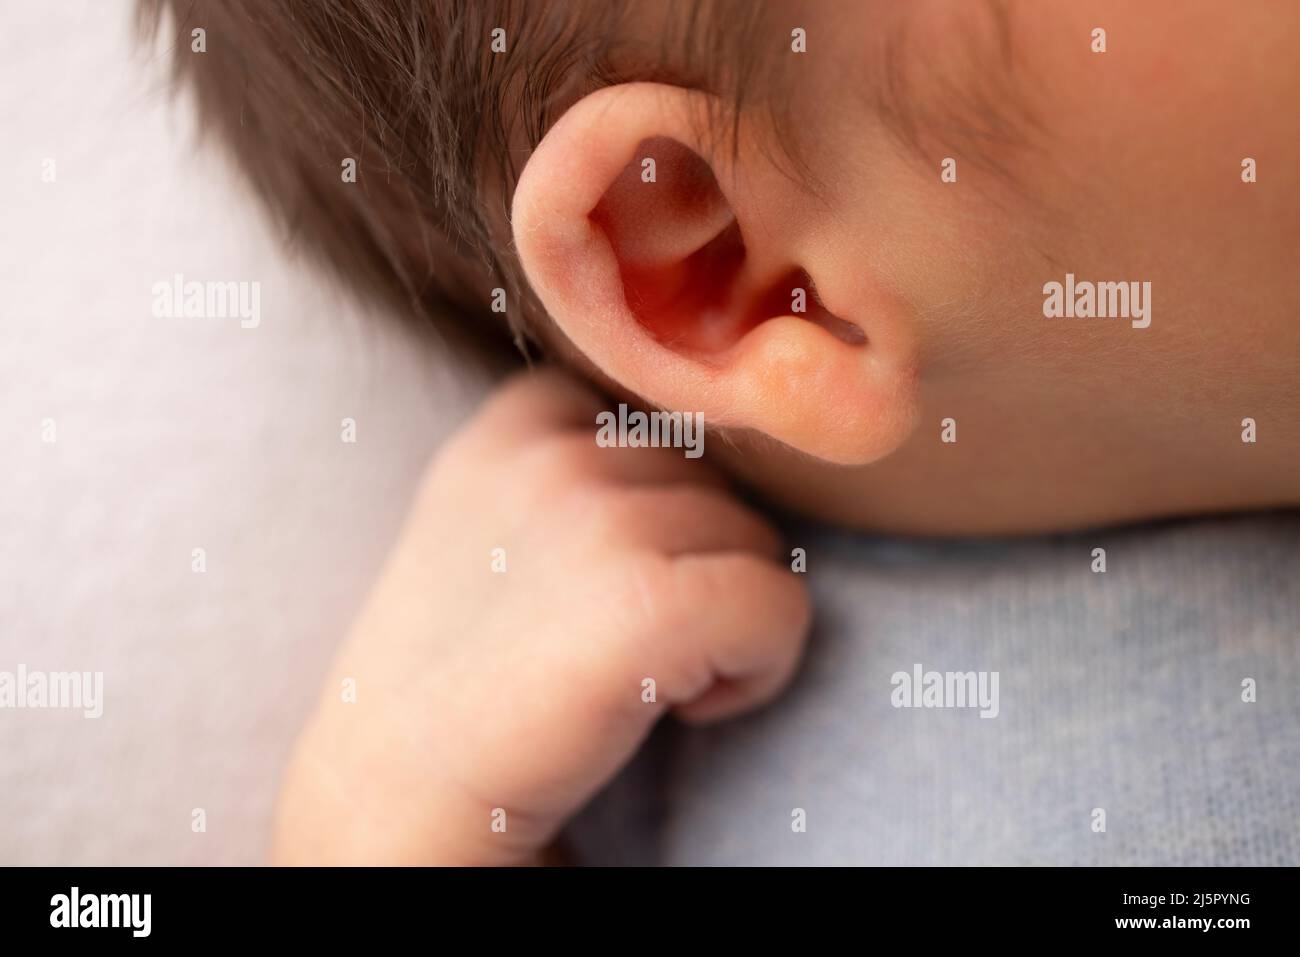 Small hand, head and ear of a newborn baby. Studio macro photography.  Stock Photo